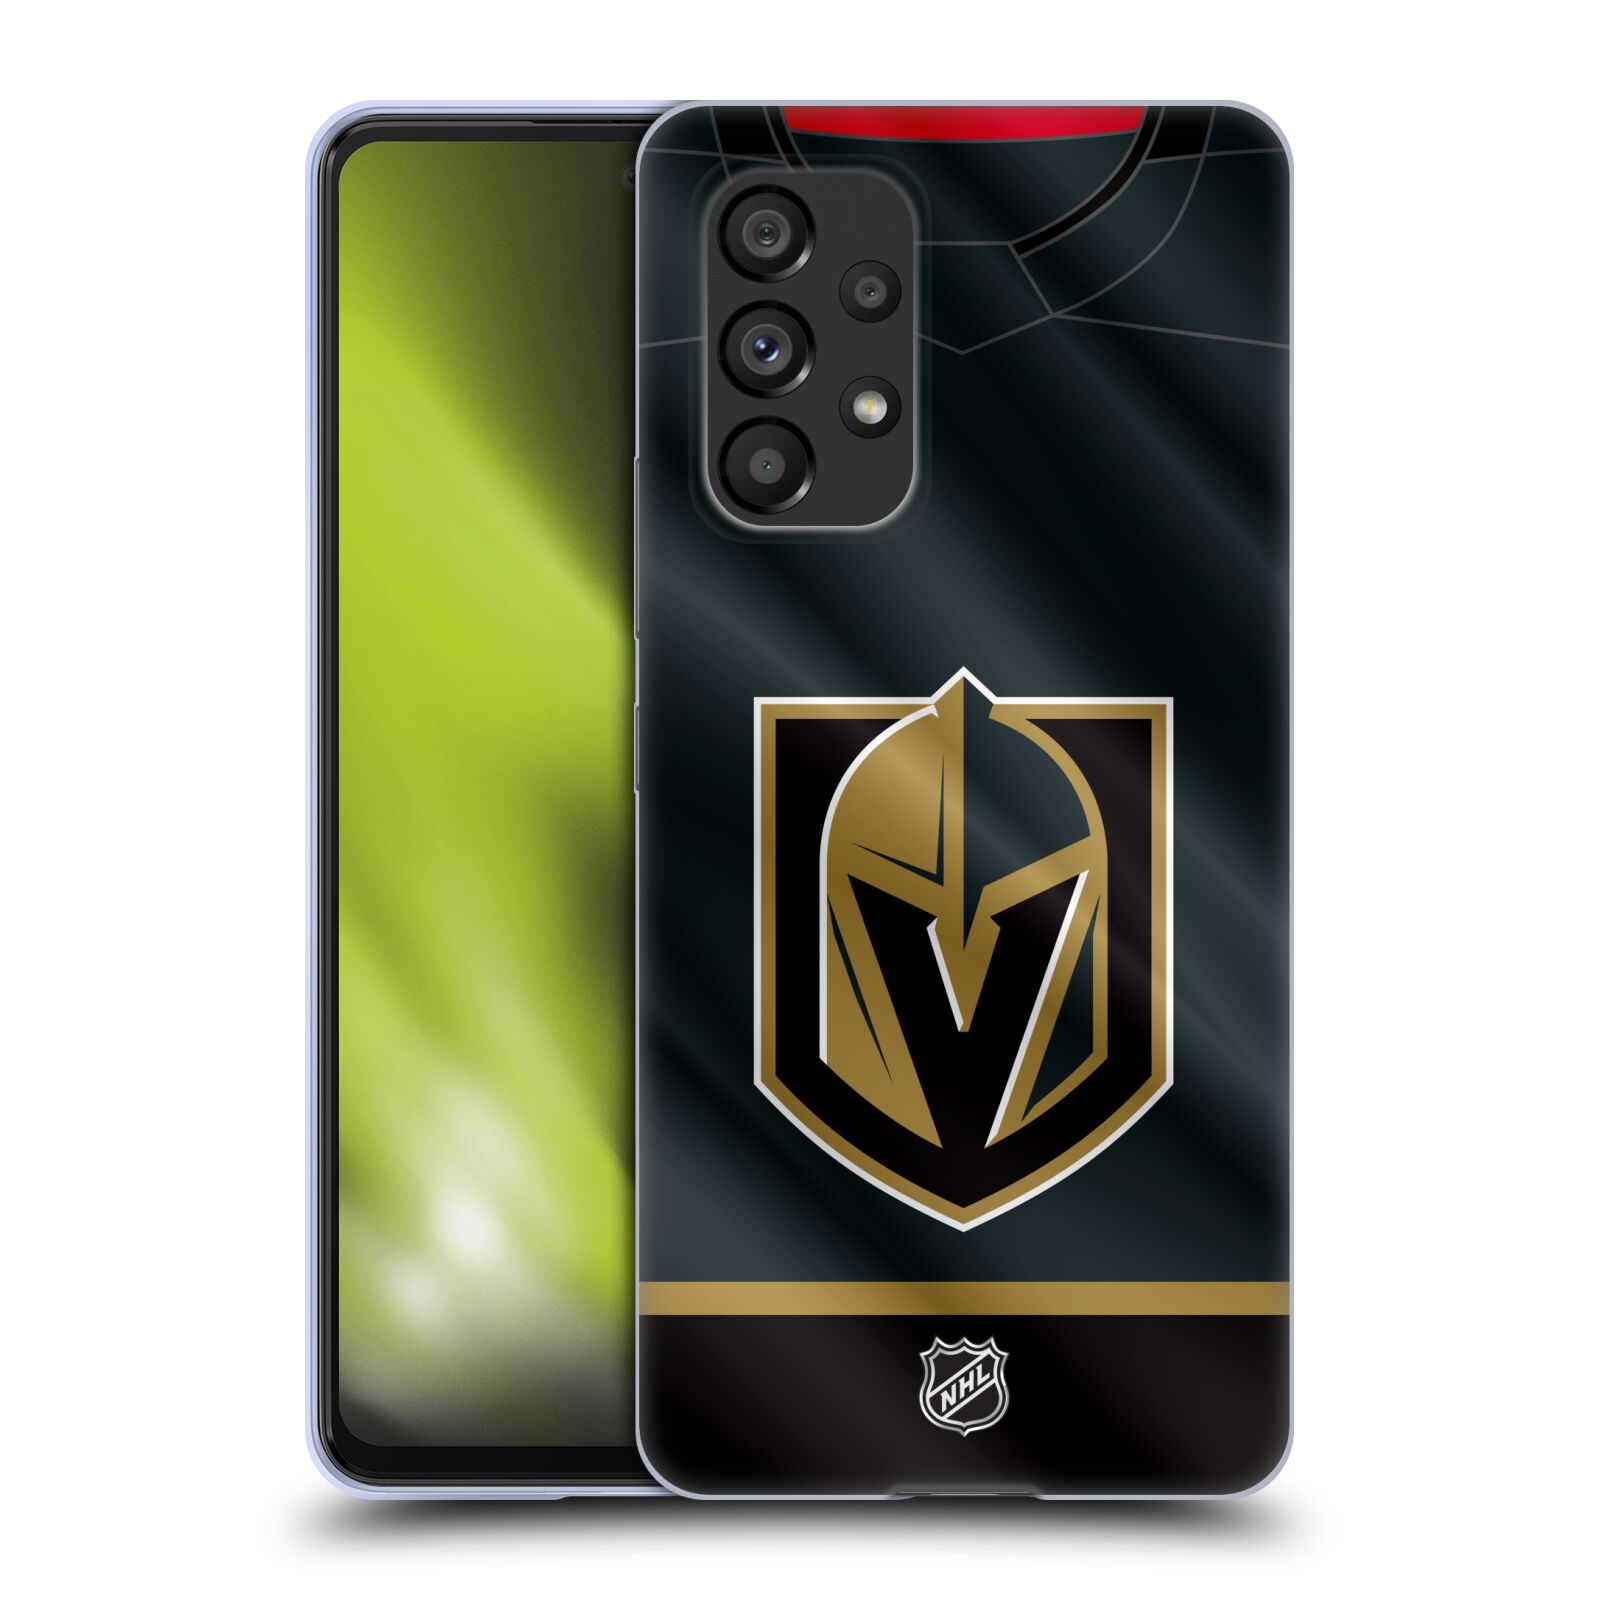 Silikonové pouzdro na mobil Samsung Galaxy A53 5G - NHL - Dres Vegas Golden Knights (Silikonový kryt, obal, pouzdro na mobilní telefon Samsung Galaxy A53 5G s licencovaným motivem NHL - Dres Vegas Golden Knights)